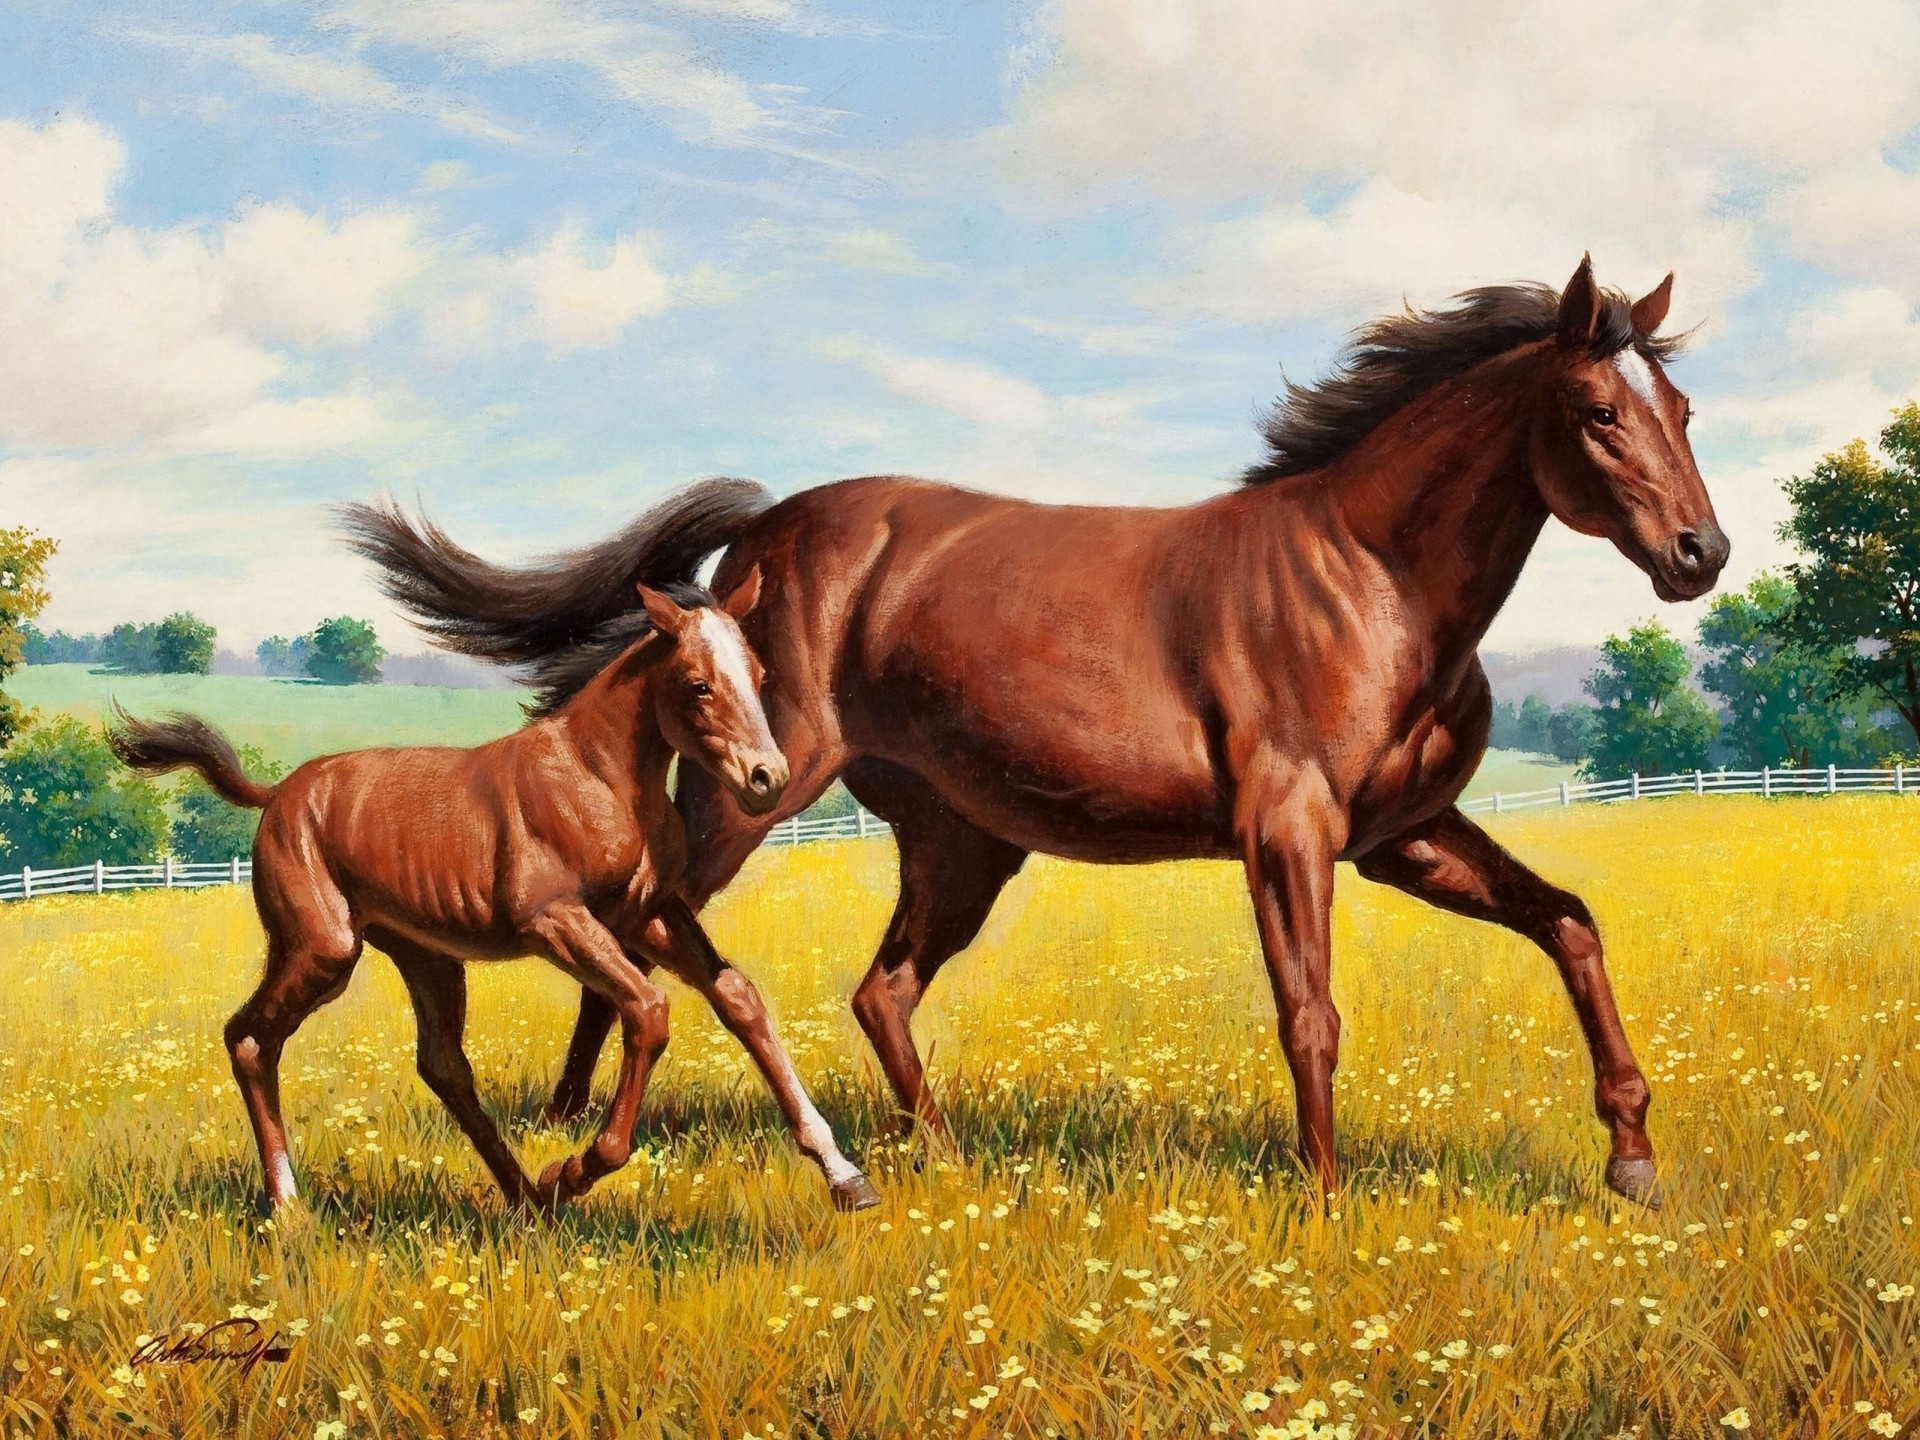 753459 descargar imagen animales, caballo, bebe animal, potro, pintura: fondos de pantalla y protectores de pantalla gratis